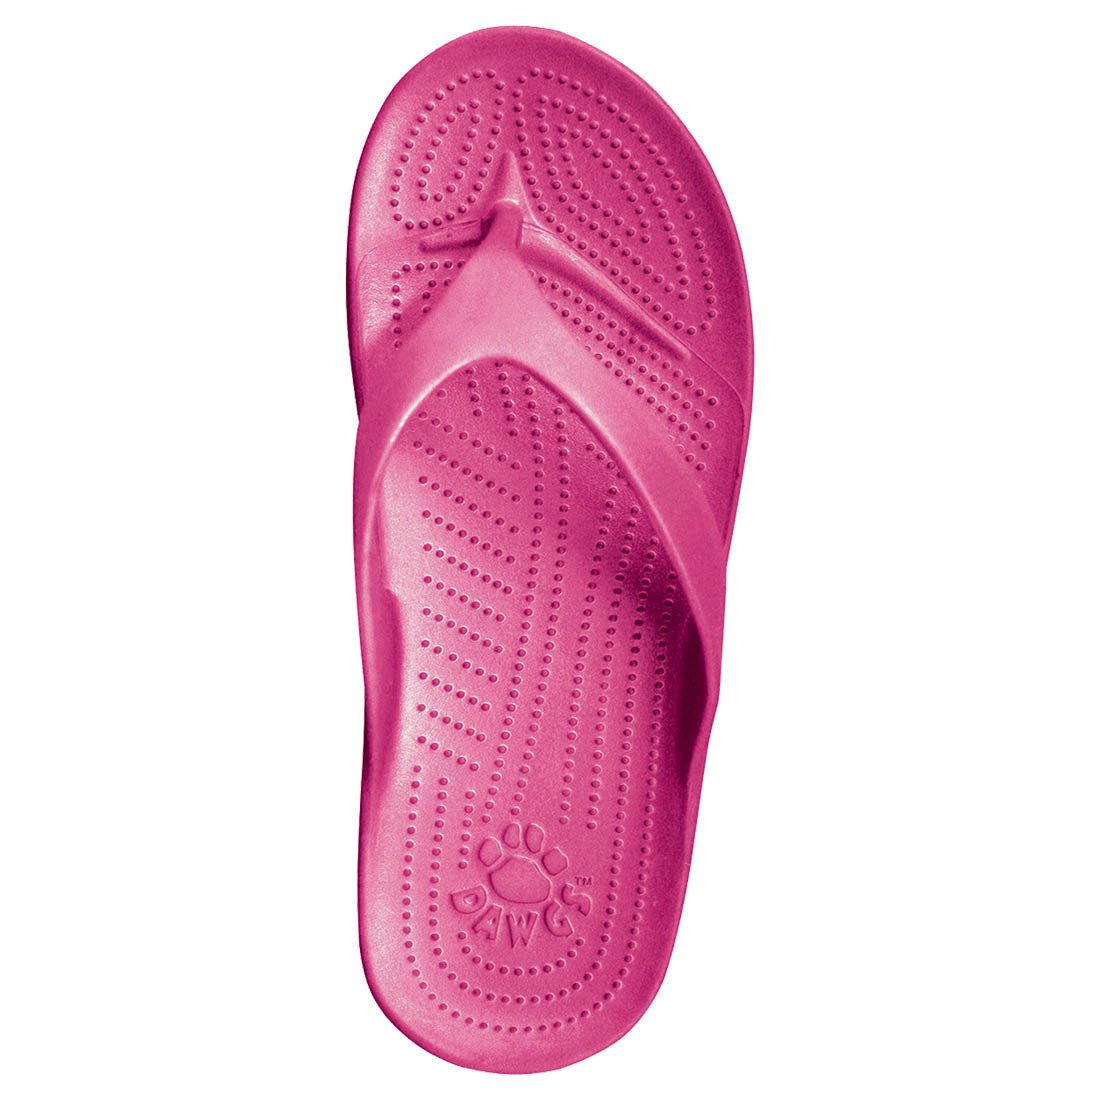 Dawgs Women's Flip Flops - Hot Pink